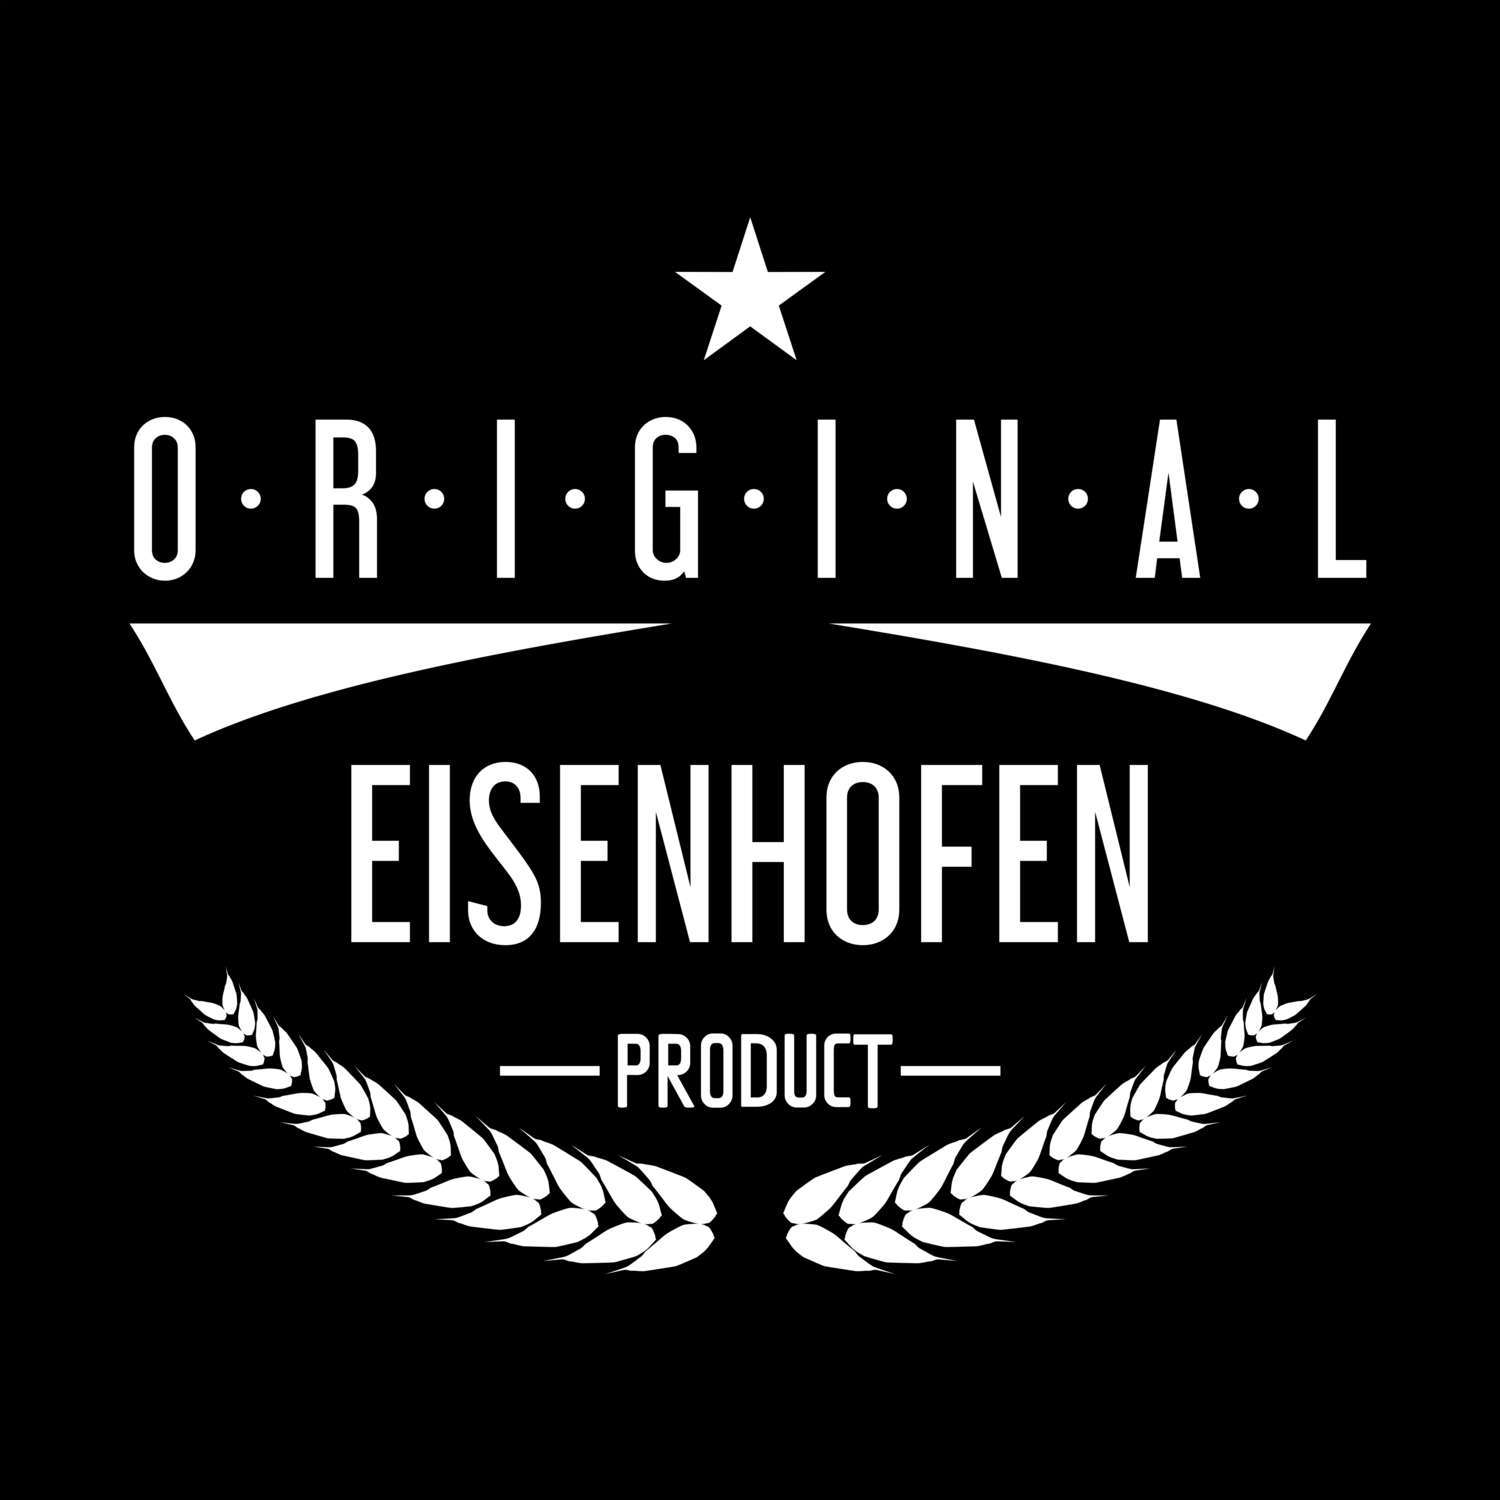 Eisenhofen T-Shirt »Original Product«